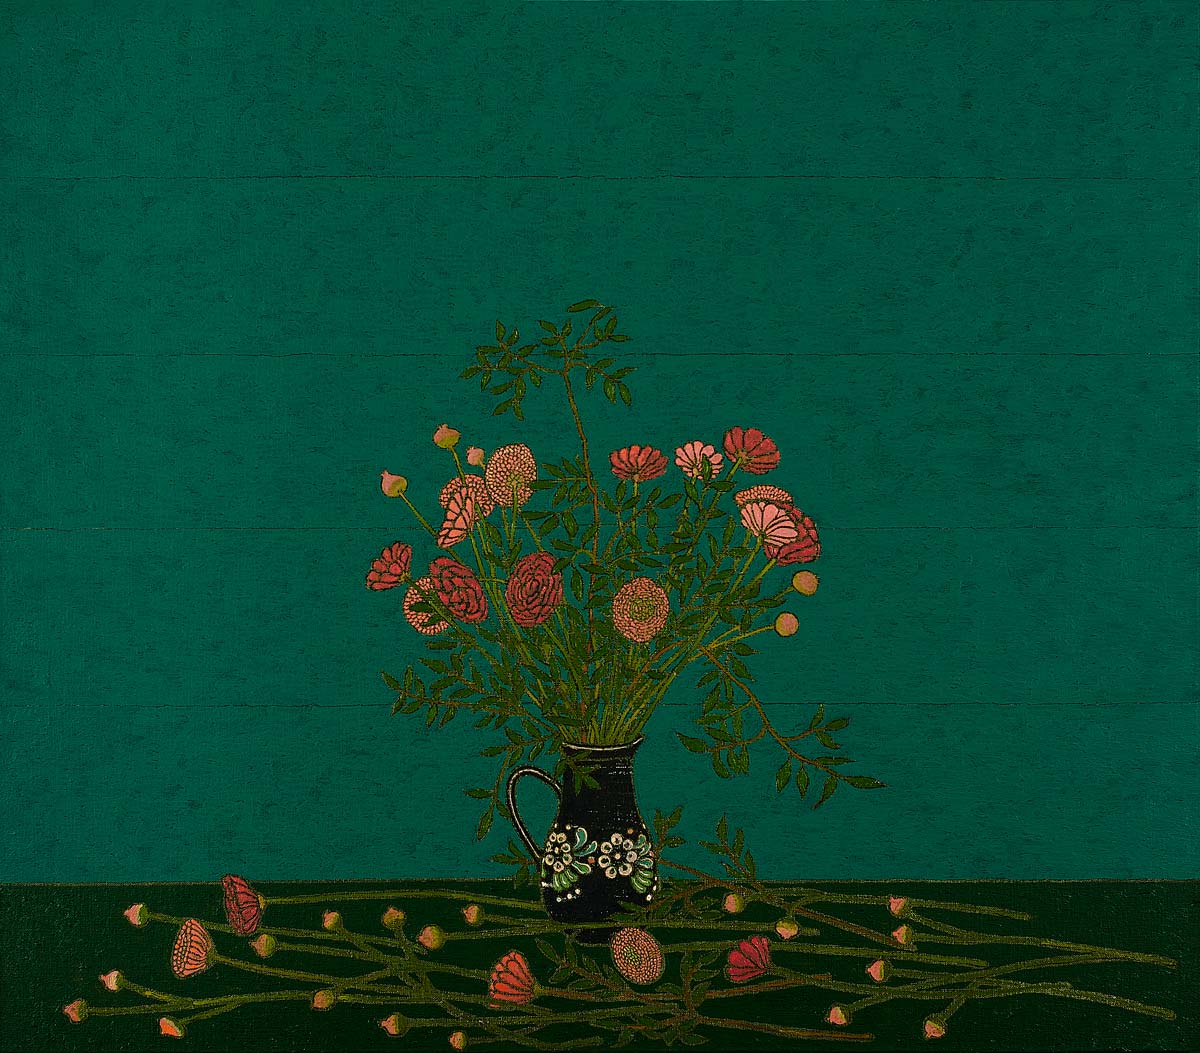 Berlin Flowers (Yorck’s Vase Green), 70 x 80 cm, Oil on Linen, 2020, Stephen Chambers Studio